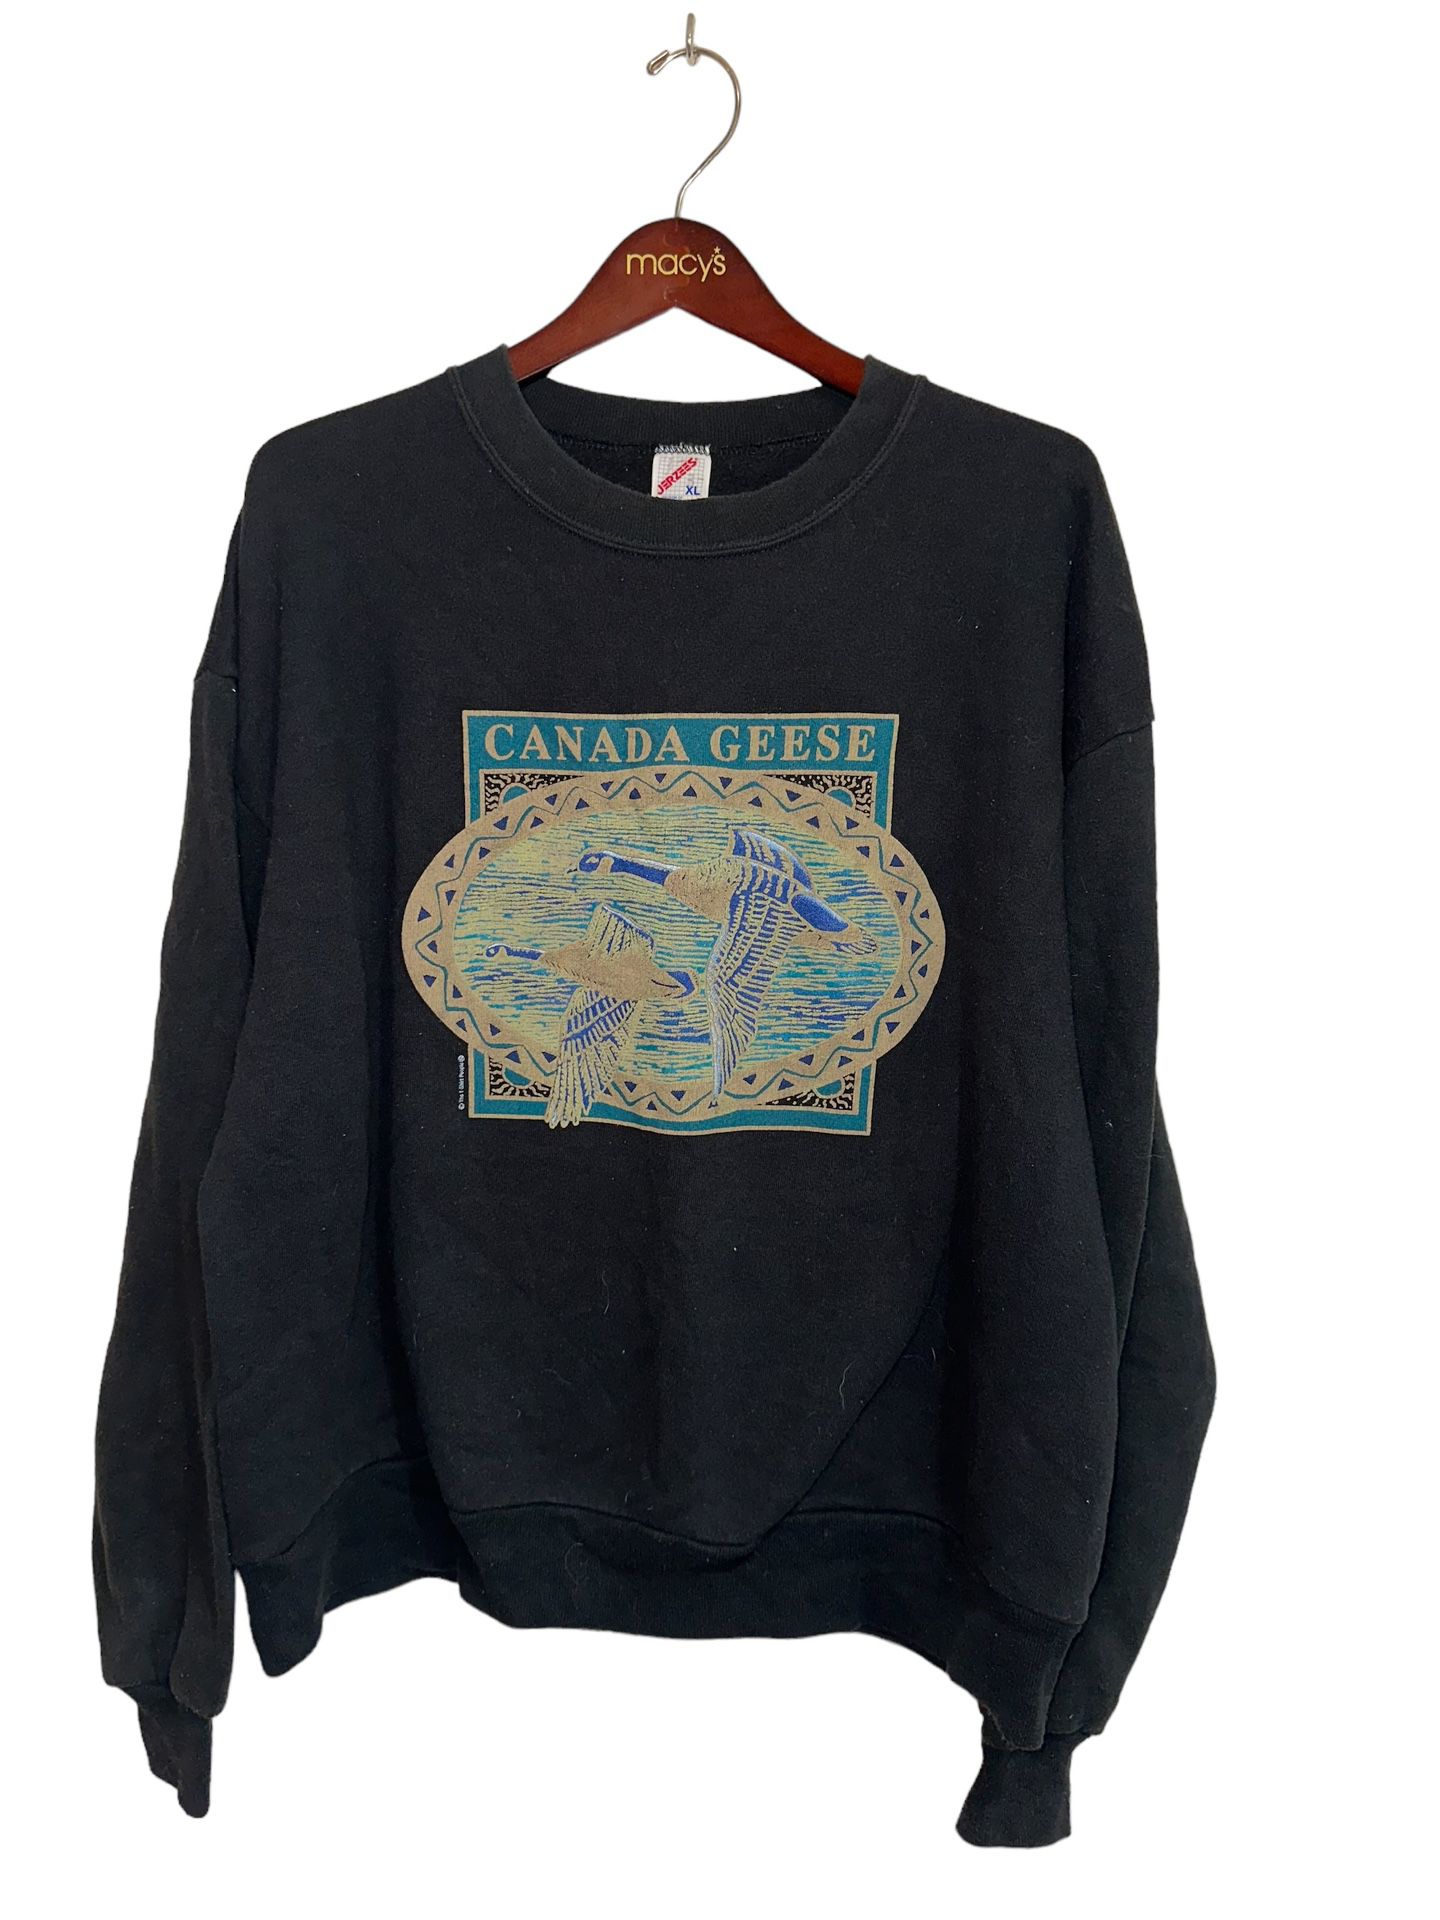 Canada Geese Crewneck Jerzees 90’s Vintage Sweatshirt Size:X-Large